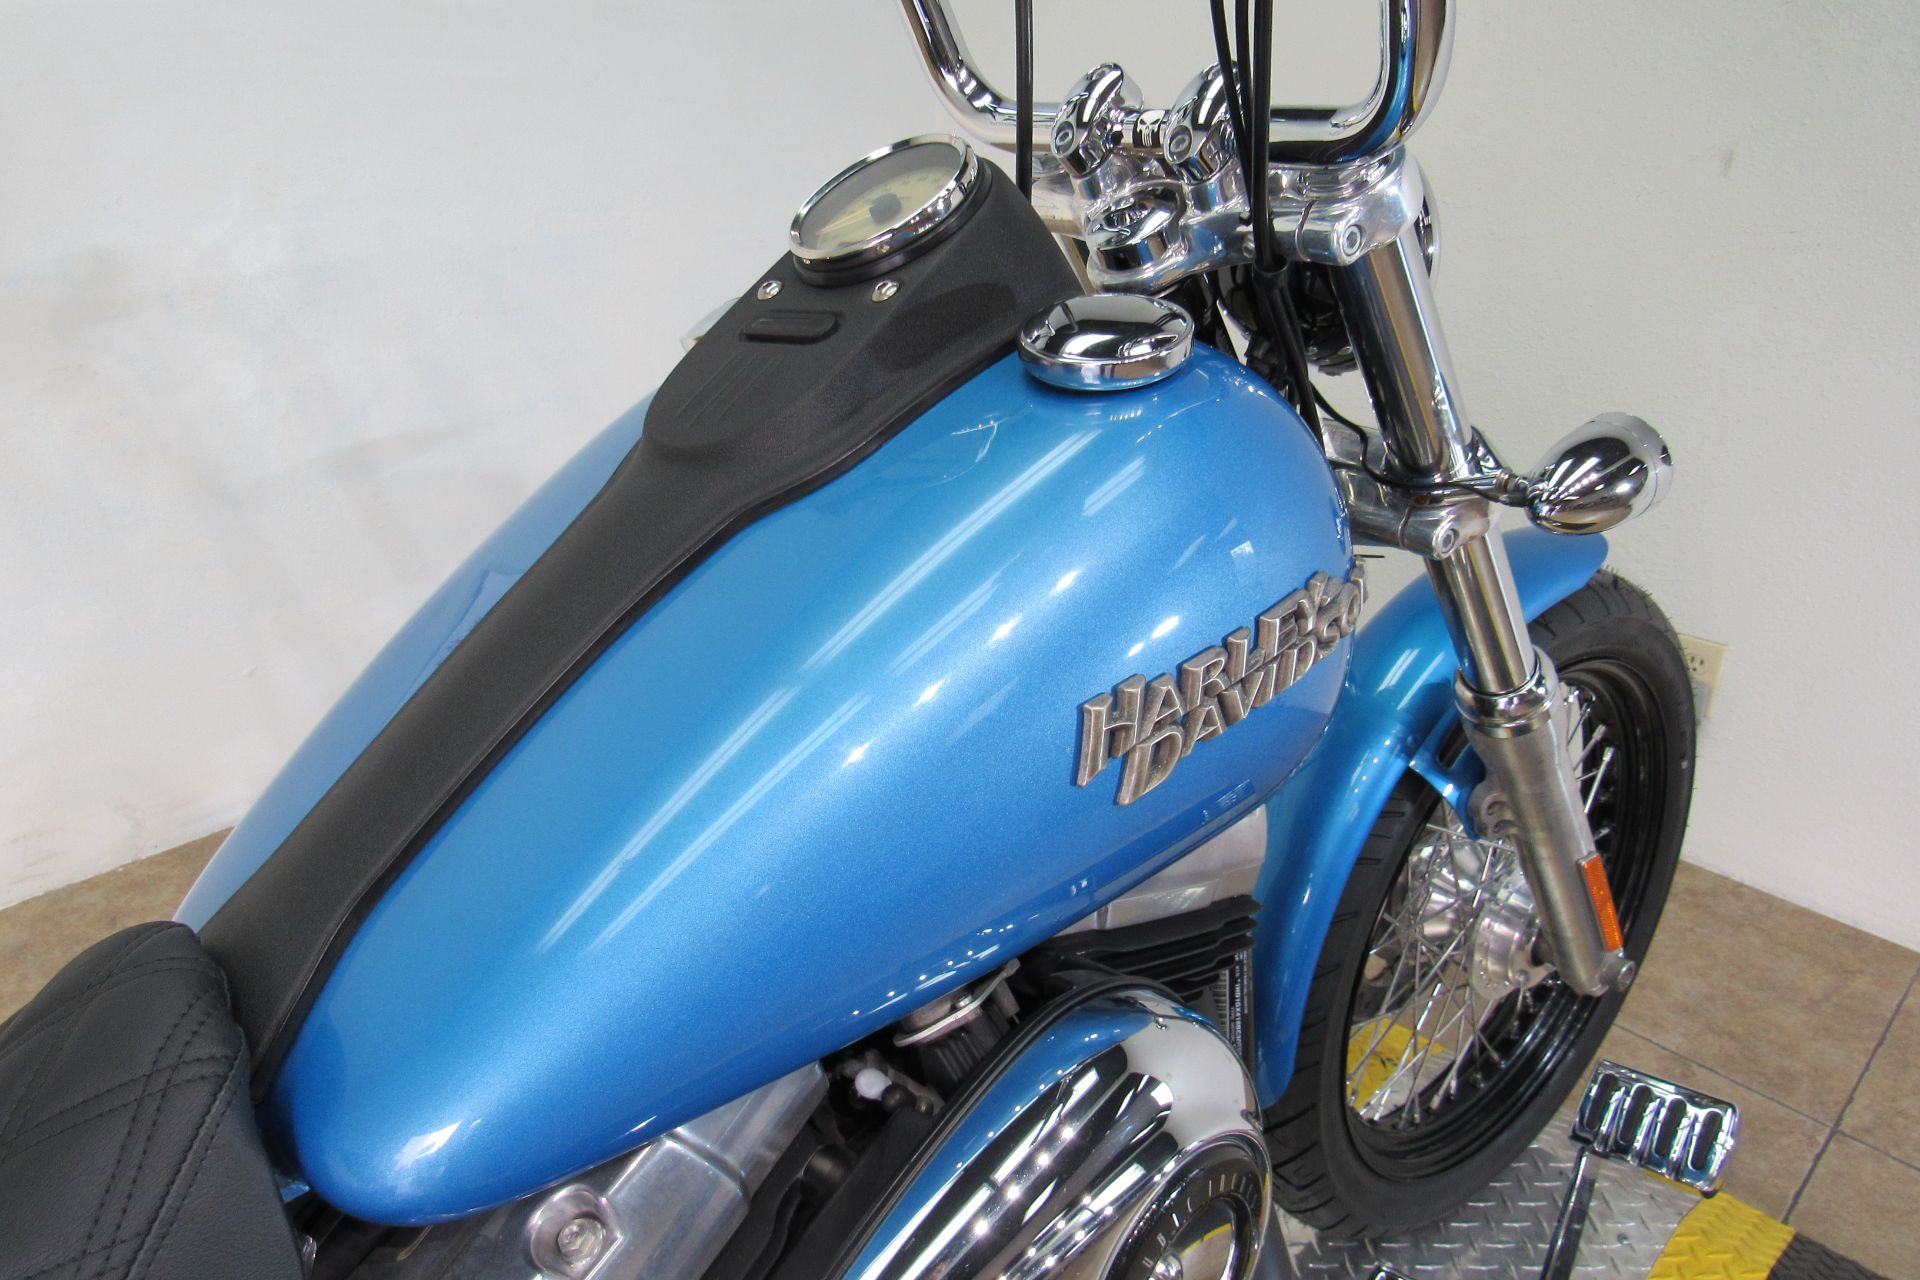 2011 Harley-Davidson Dyna® Street Bob® in Temecula, California - Photo 26